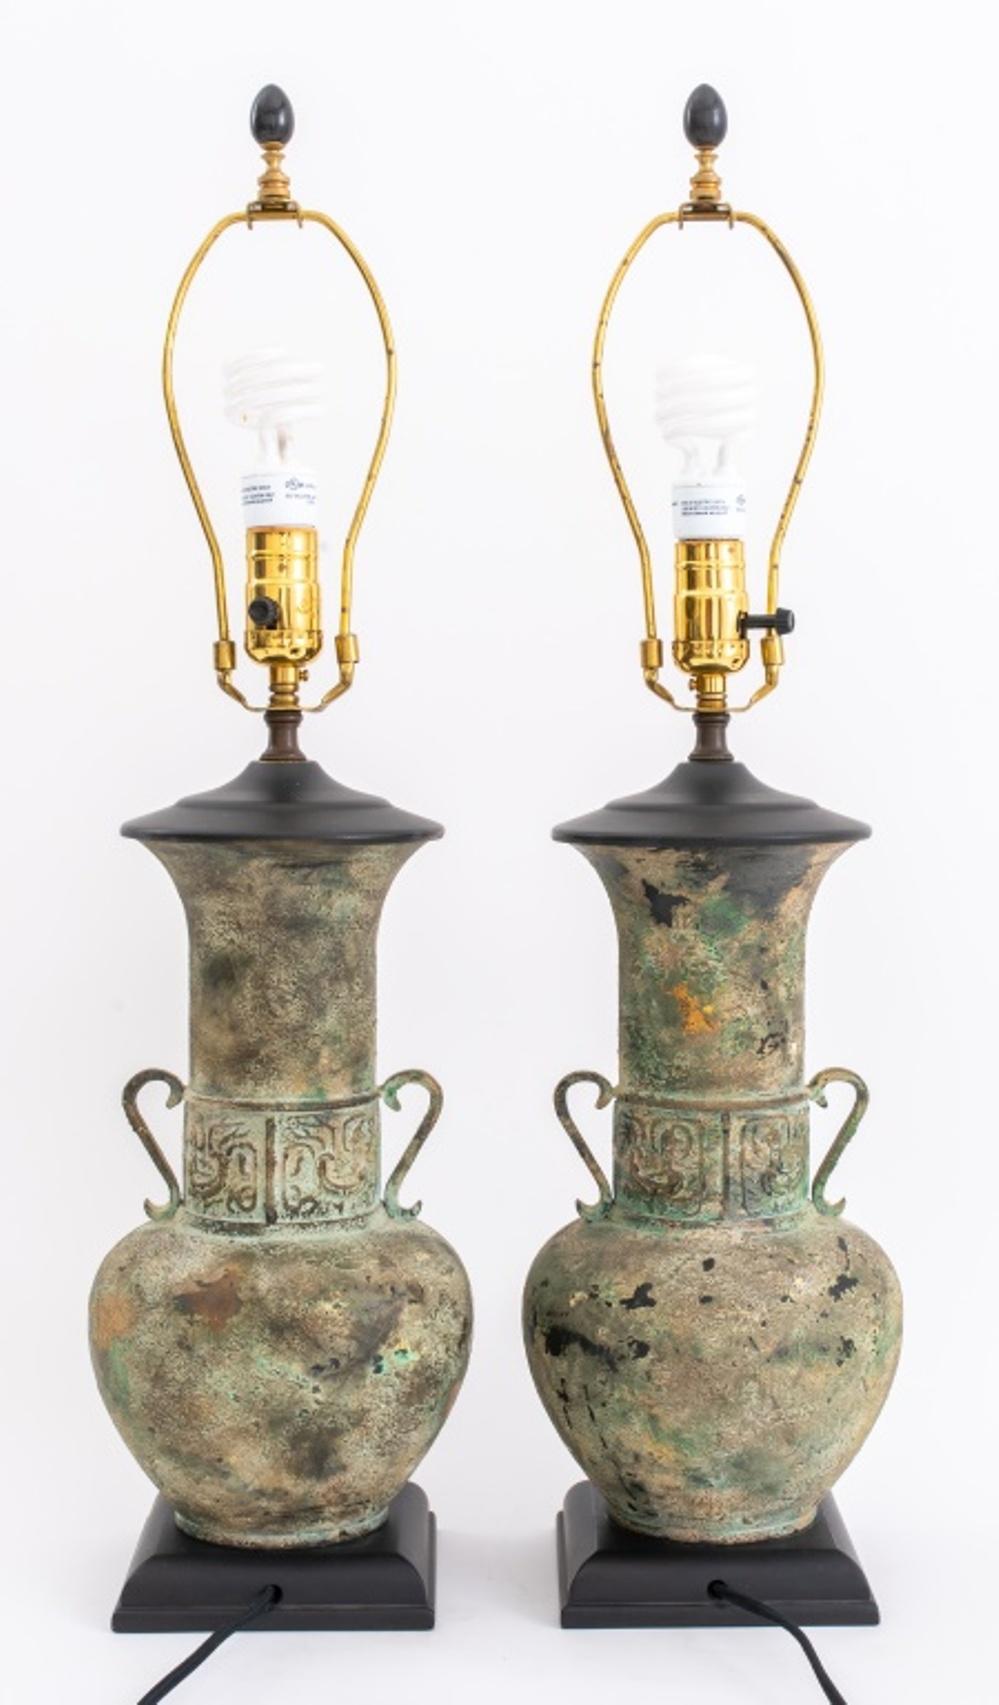 Patinated Ancient Greek Revival Amphora Table Lamps, Pair